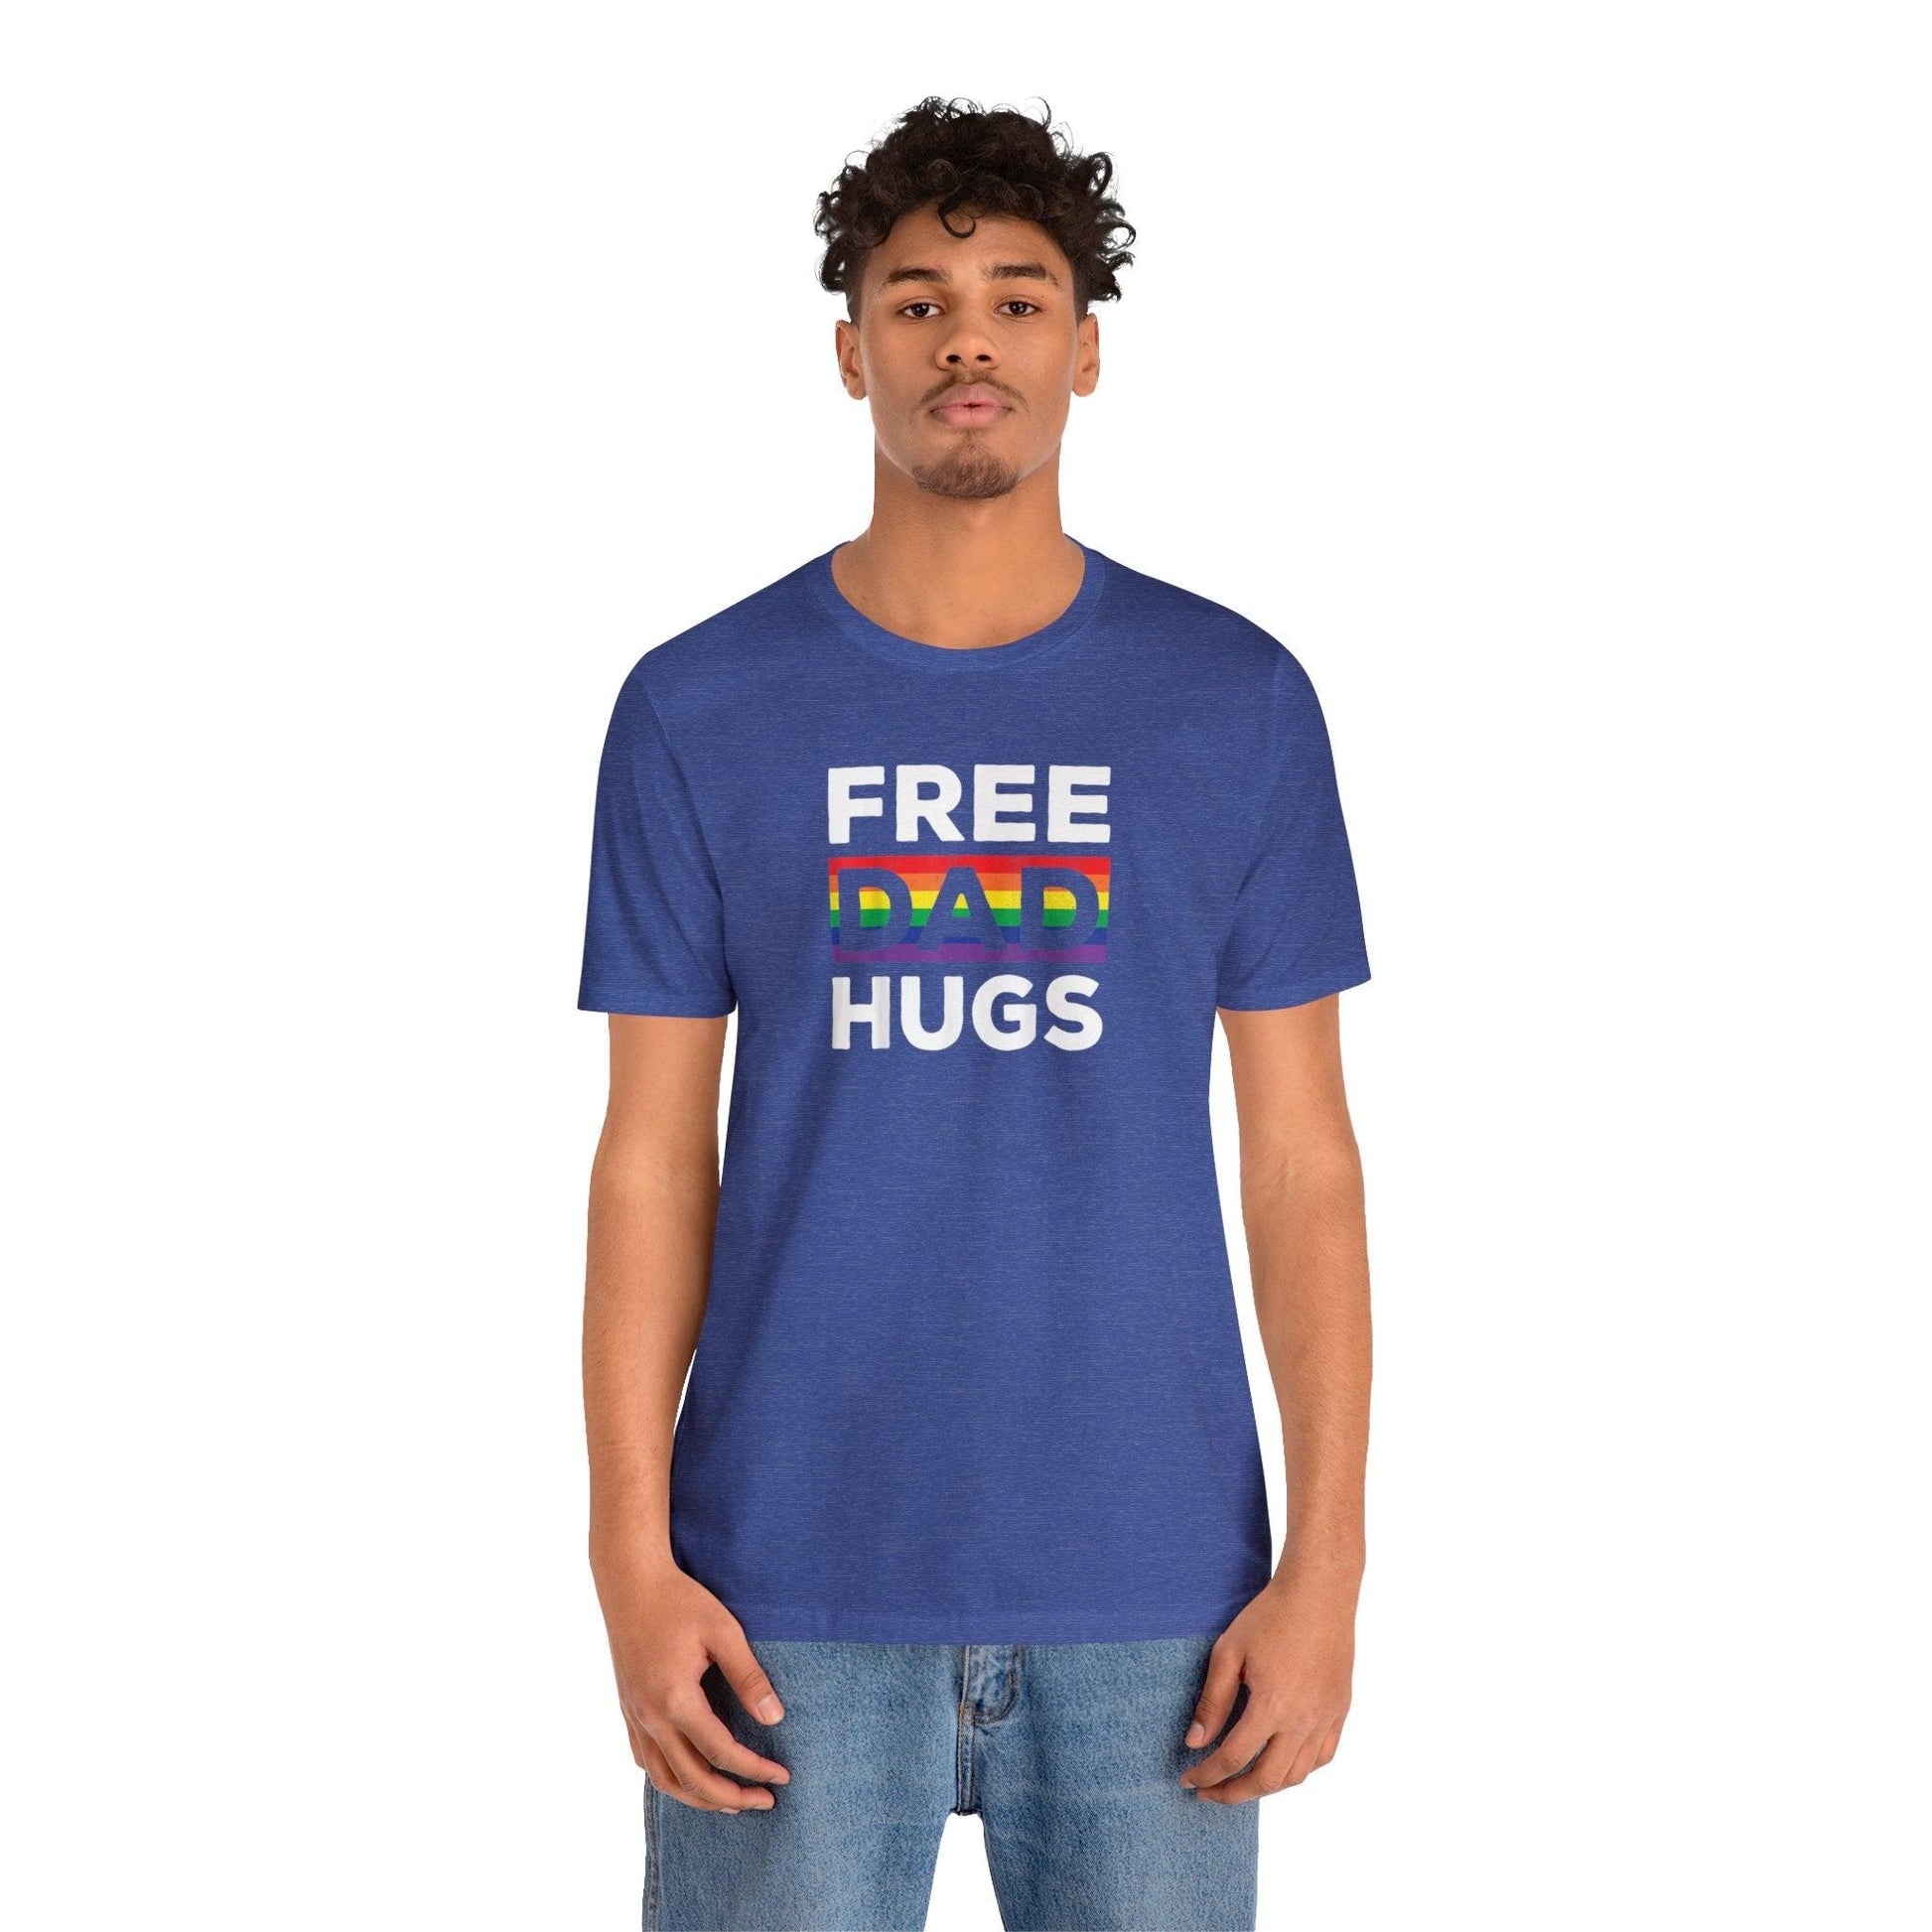 Free Dad Hugs - Wicked Naughty Apparel